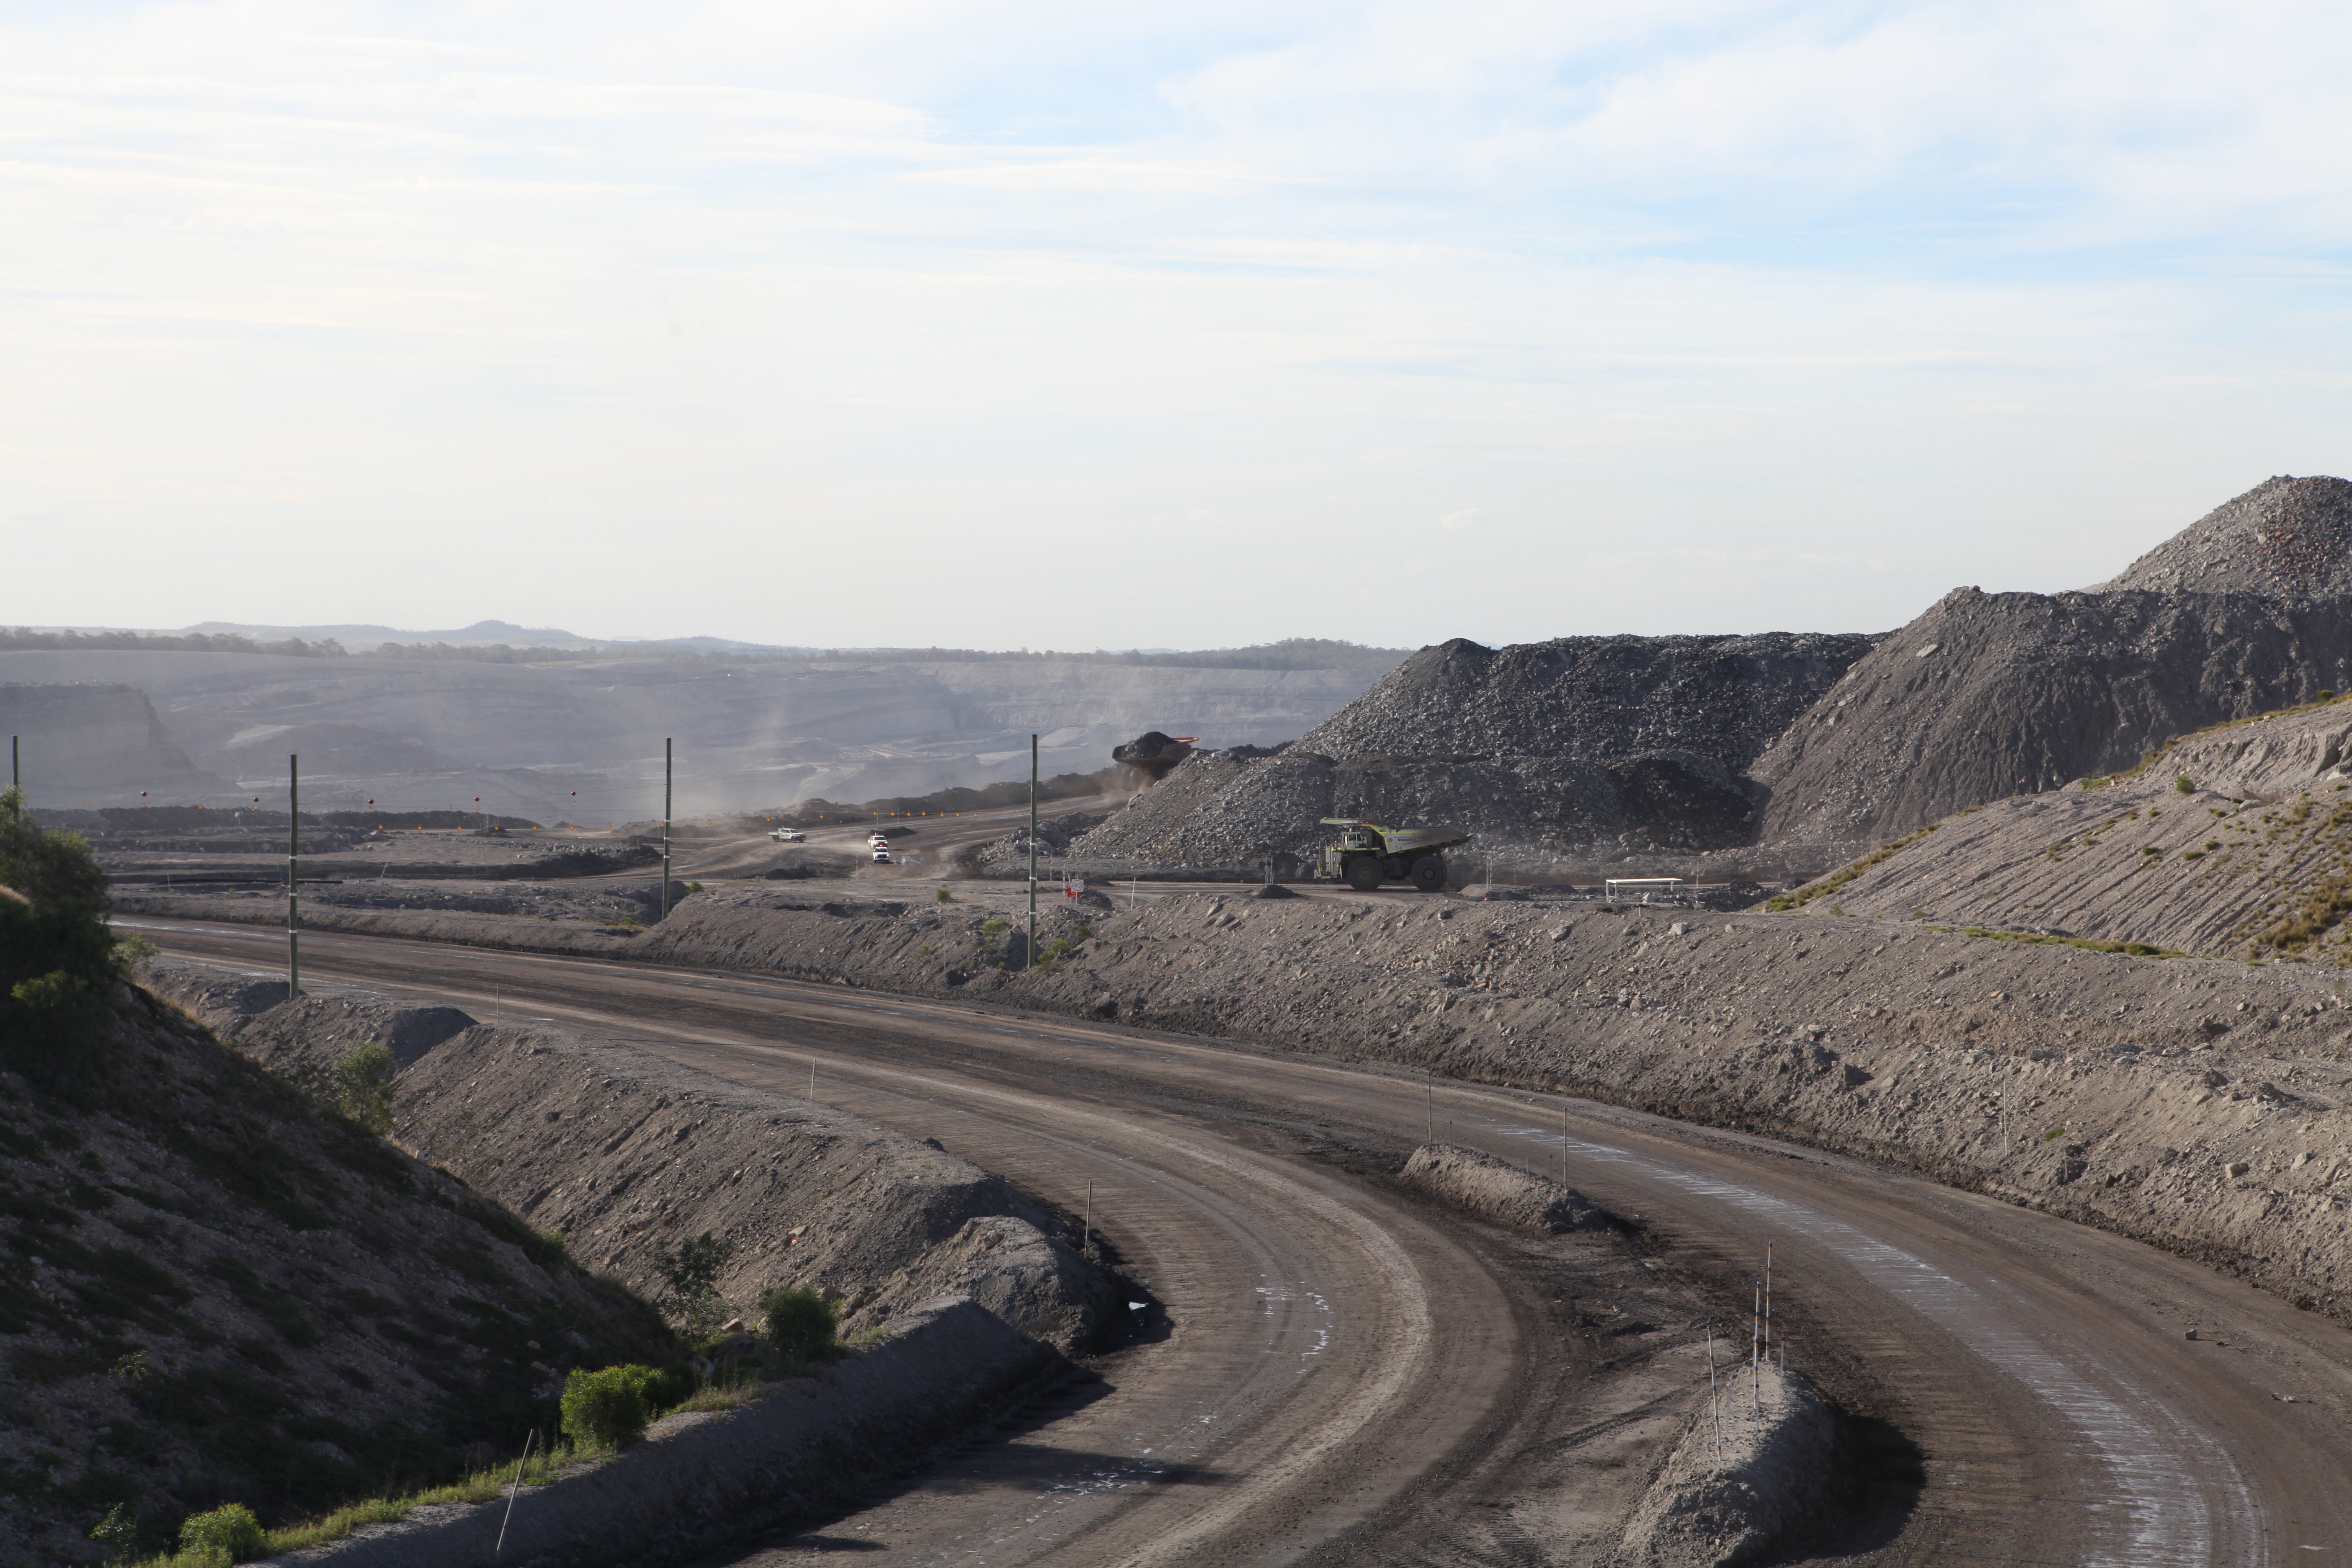 The Mount Thorley Warkworth mine, near Bulga, Australia